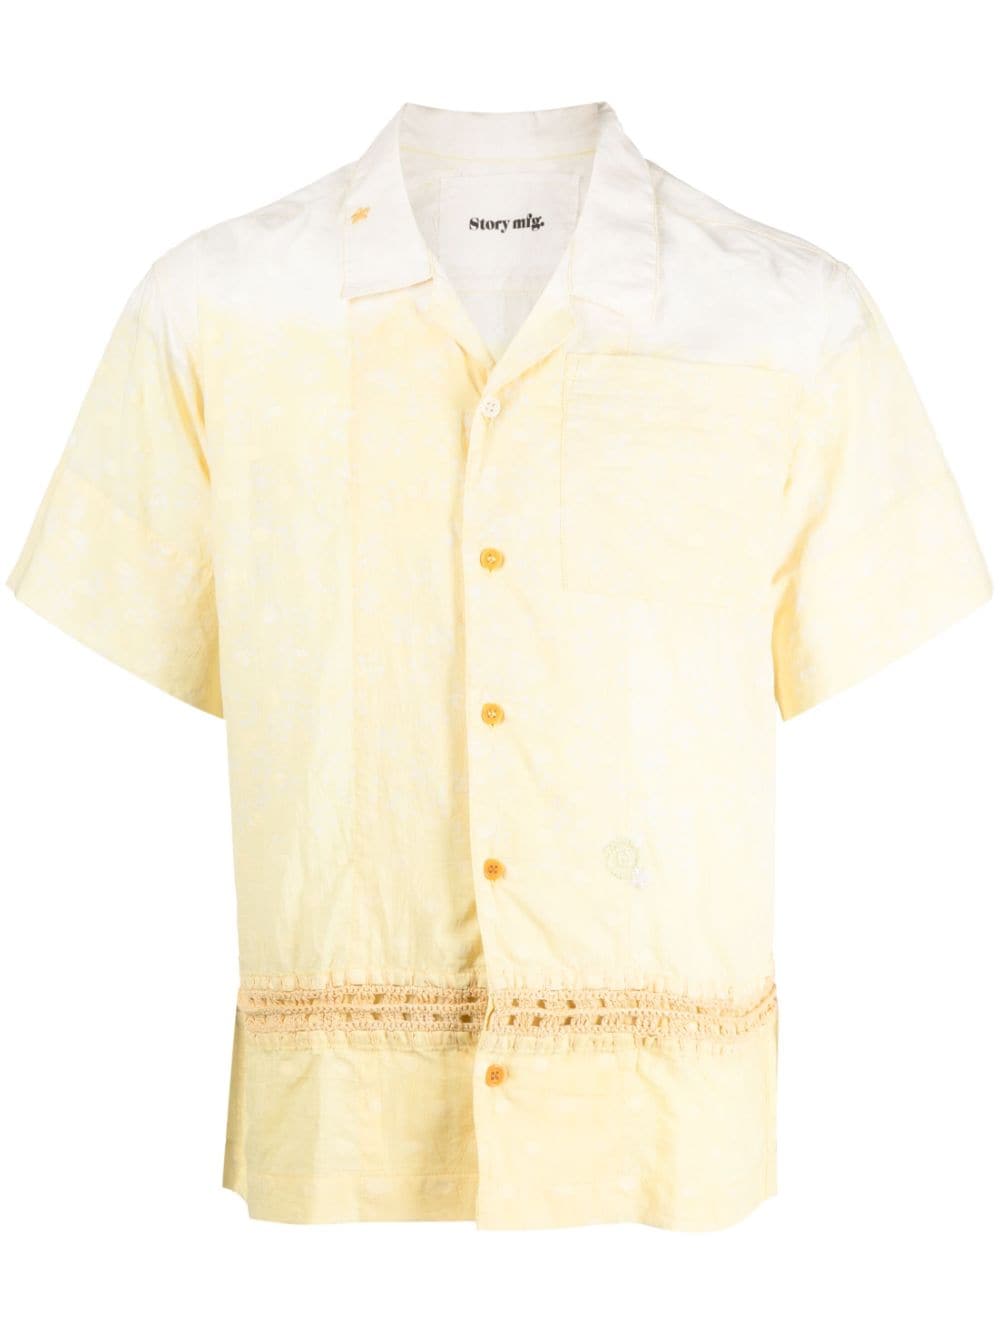 Story Mfg. Greetings Polka-dot Organic-cotton Shirt In Gelb